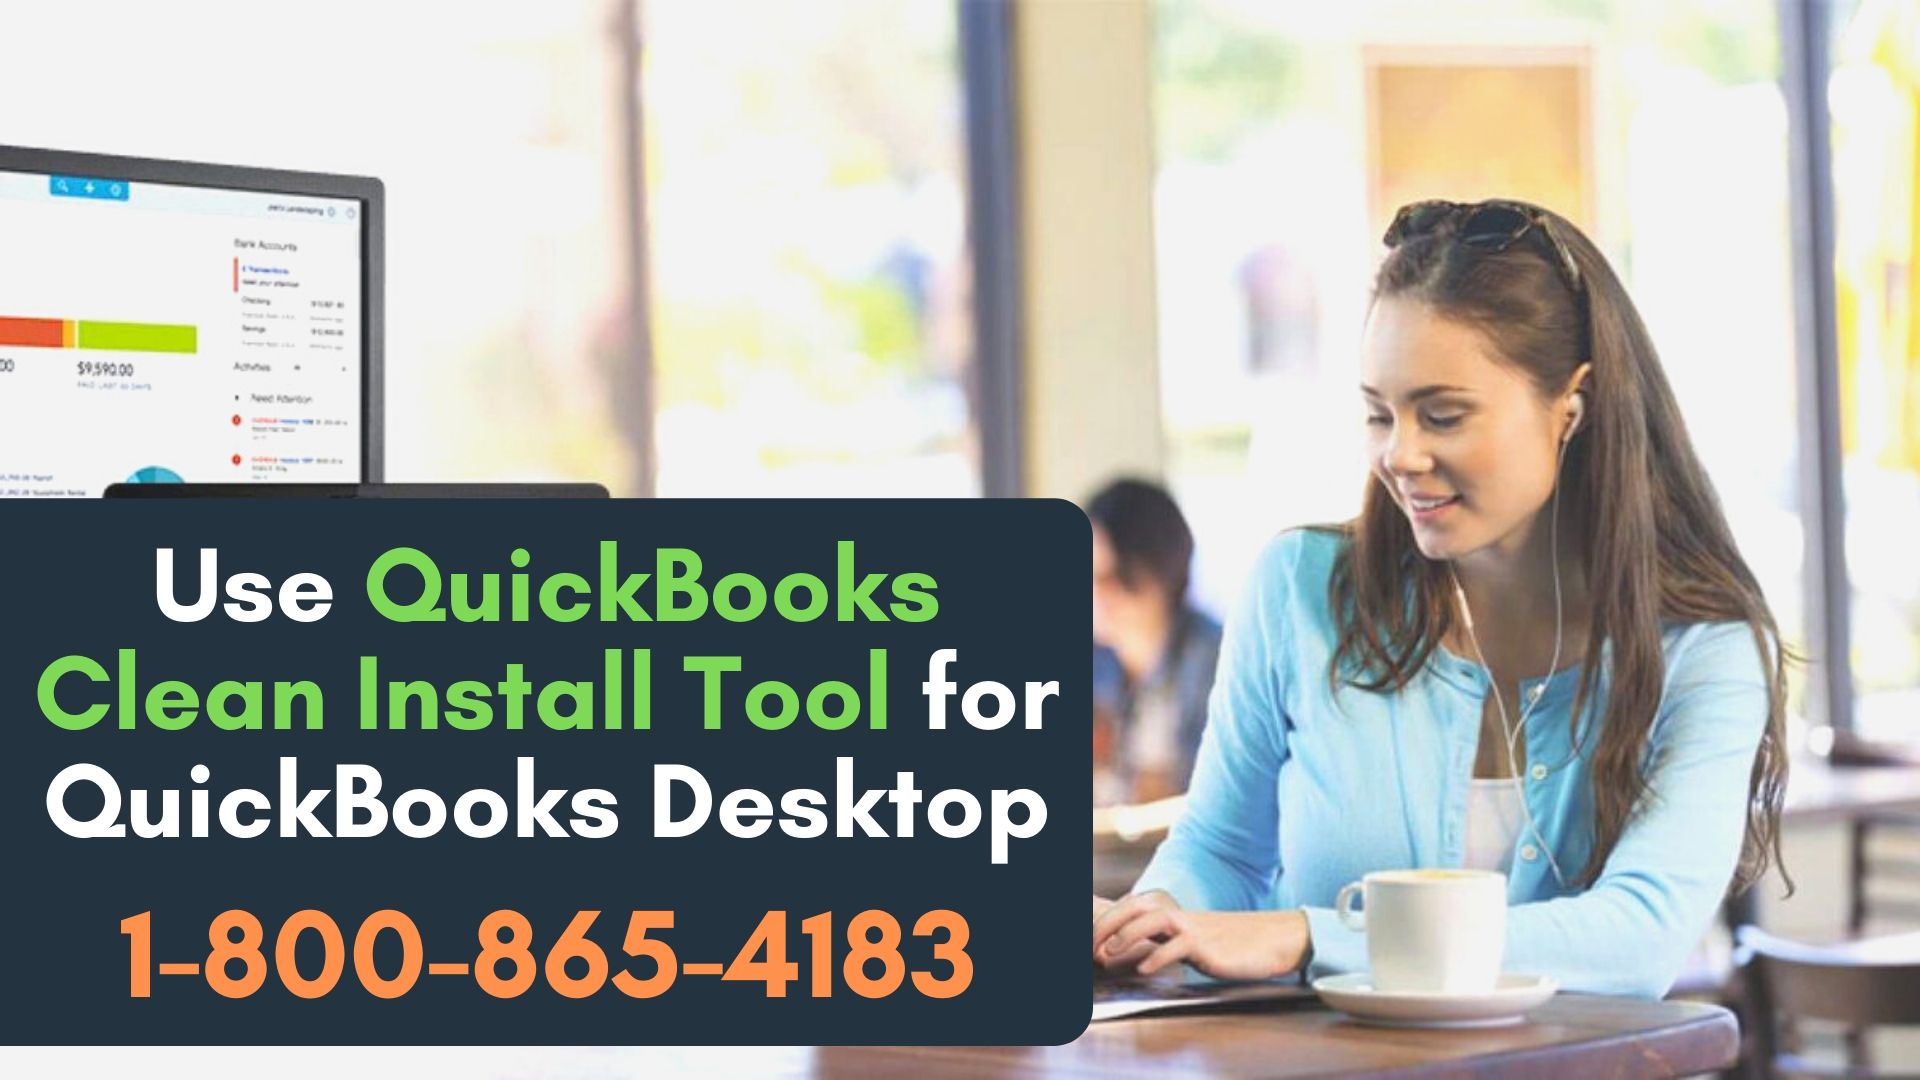 Use QuickBooks Clean Install Tool for QuickBooks Desktop